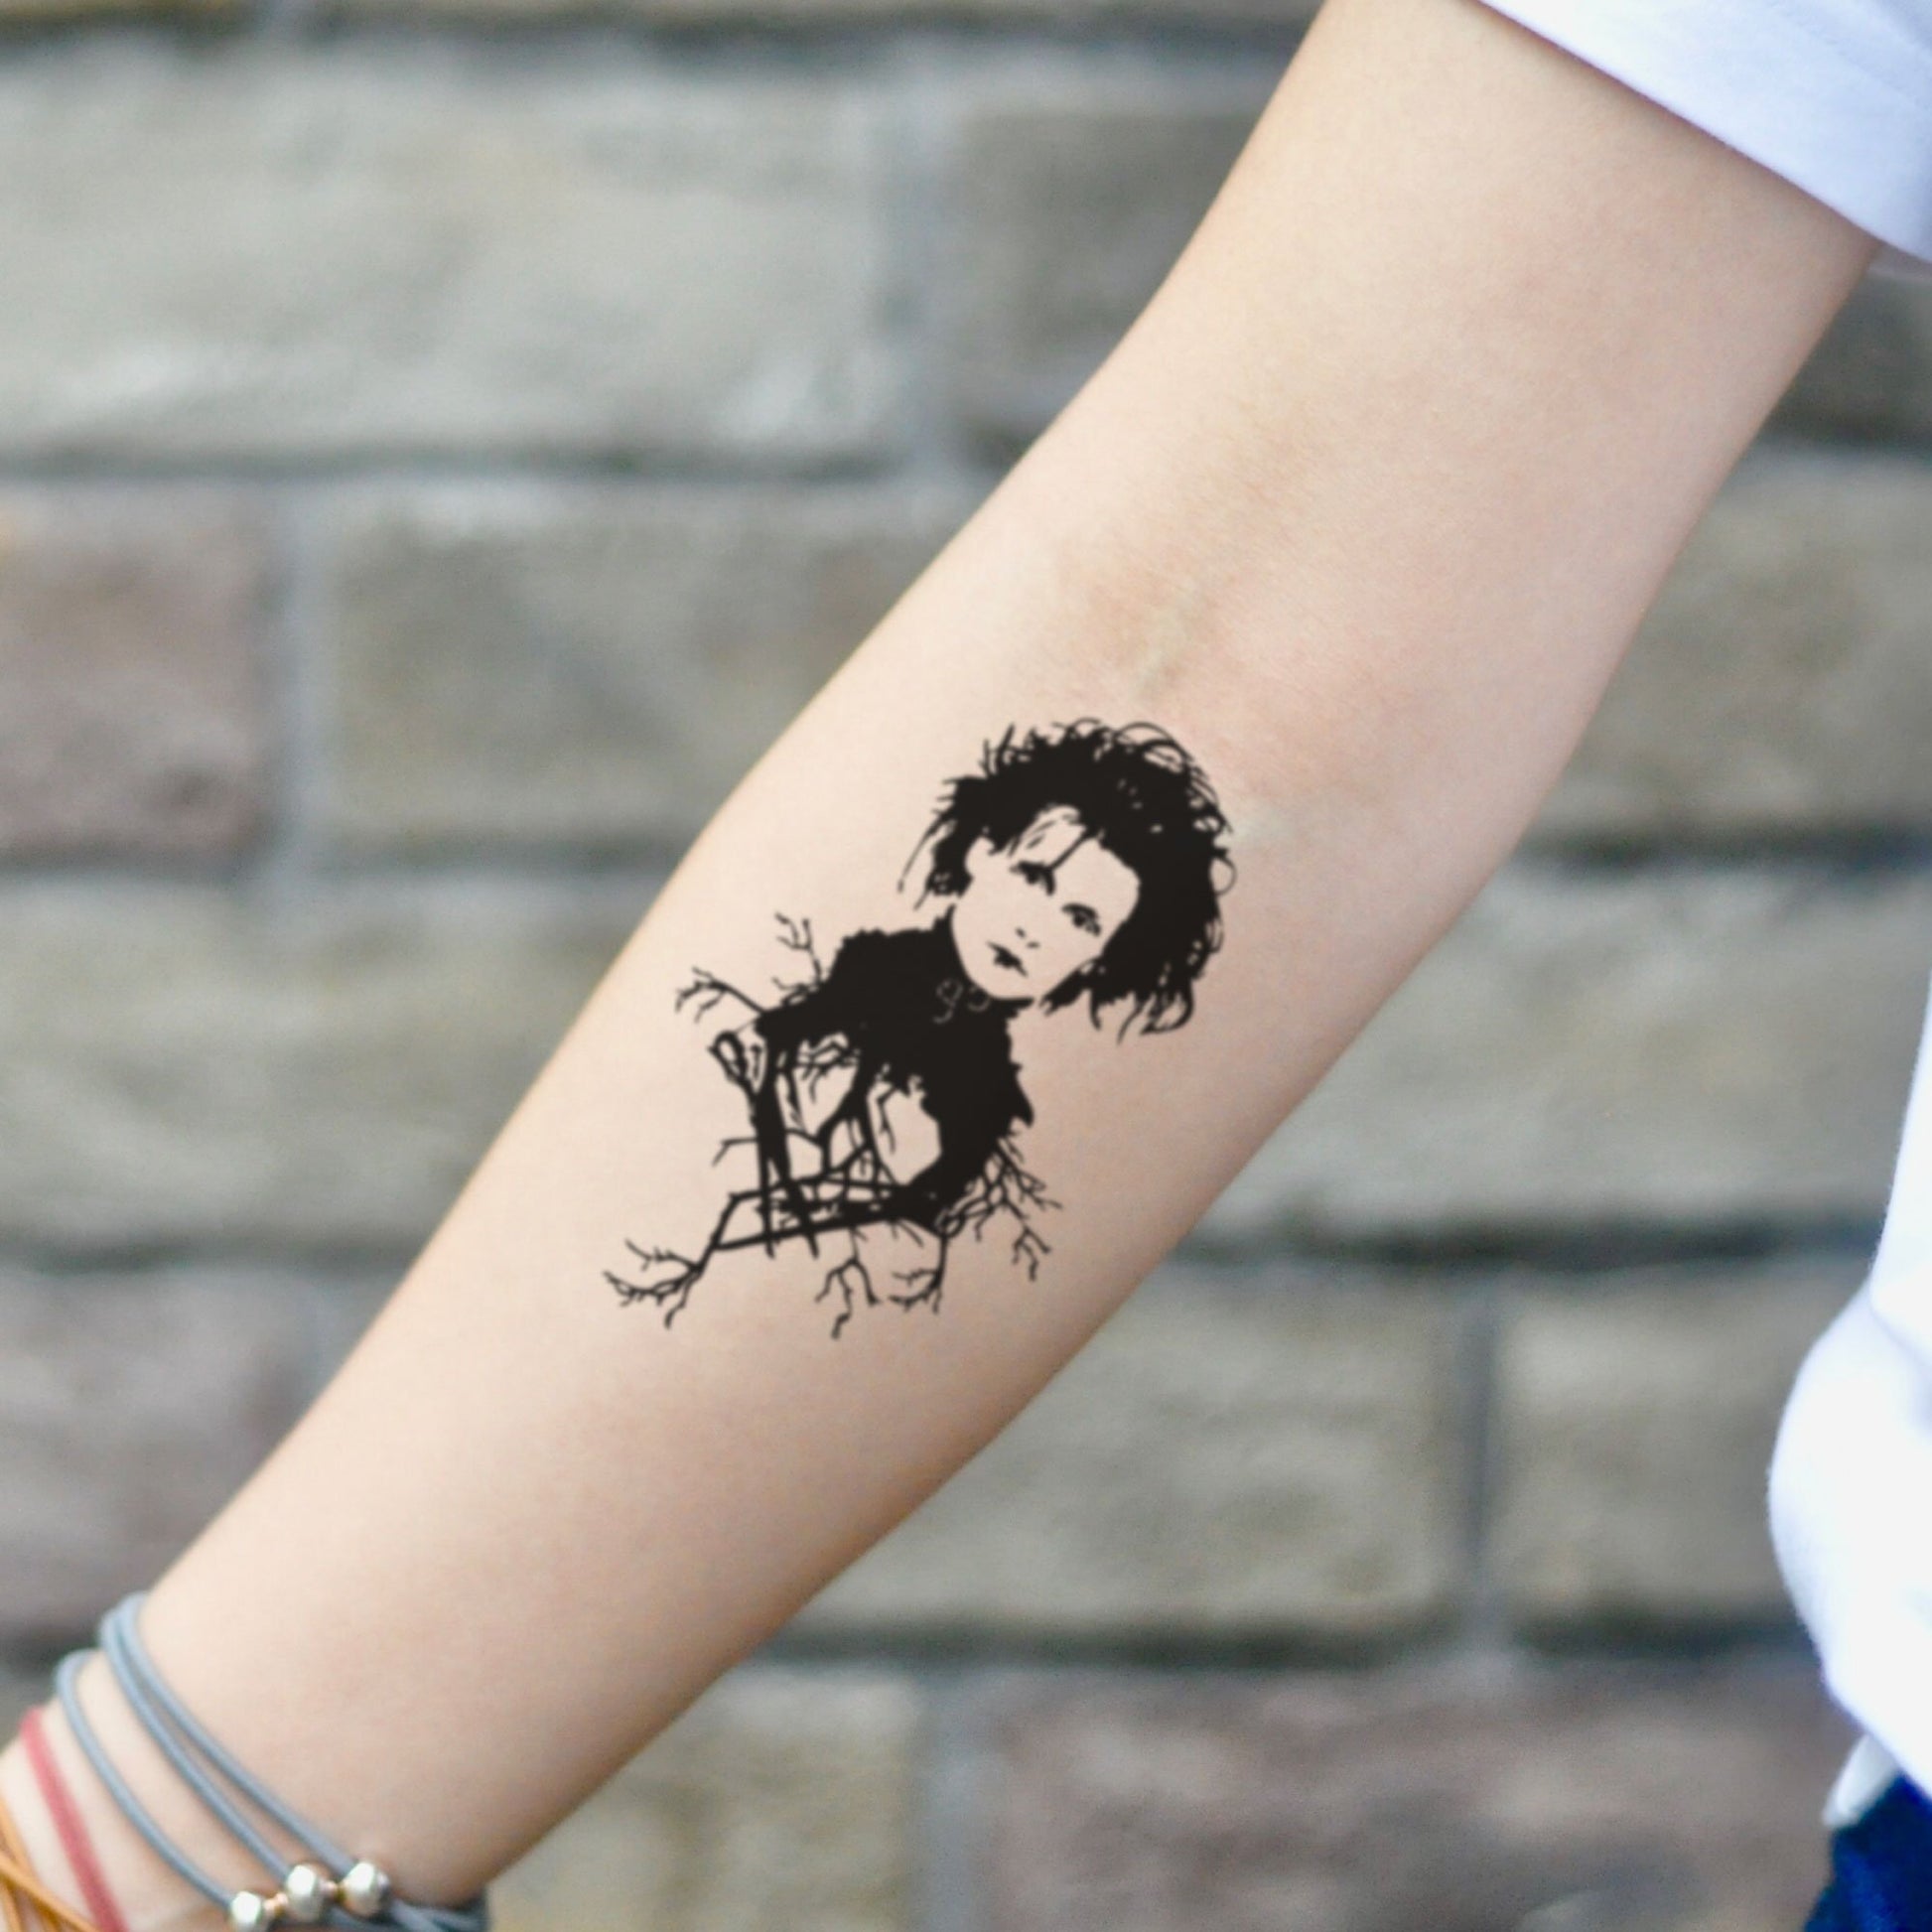 fake small edward scissorhands sweeney todd johnny depp portrait temporary tattoo sticker design idea on inner arm